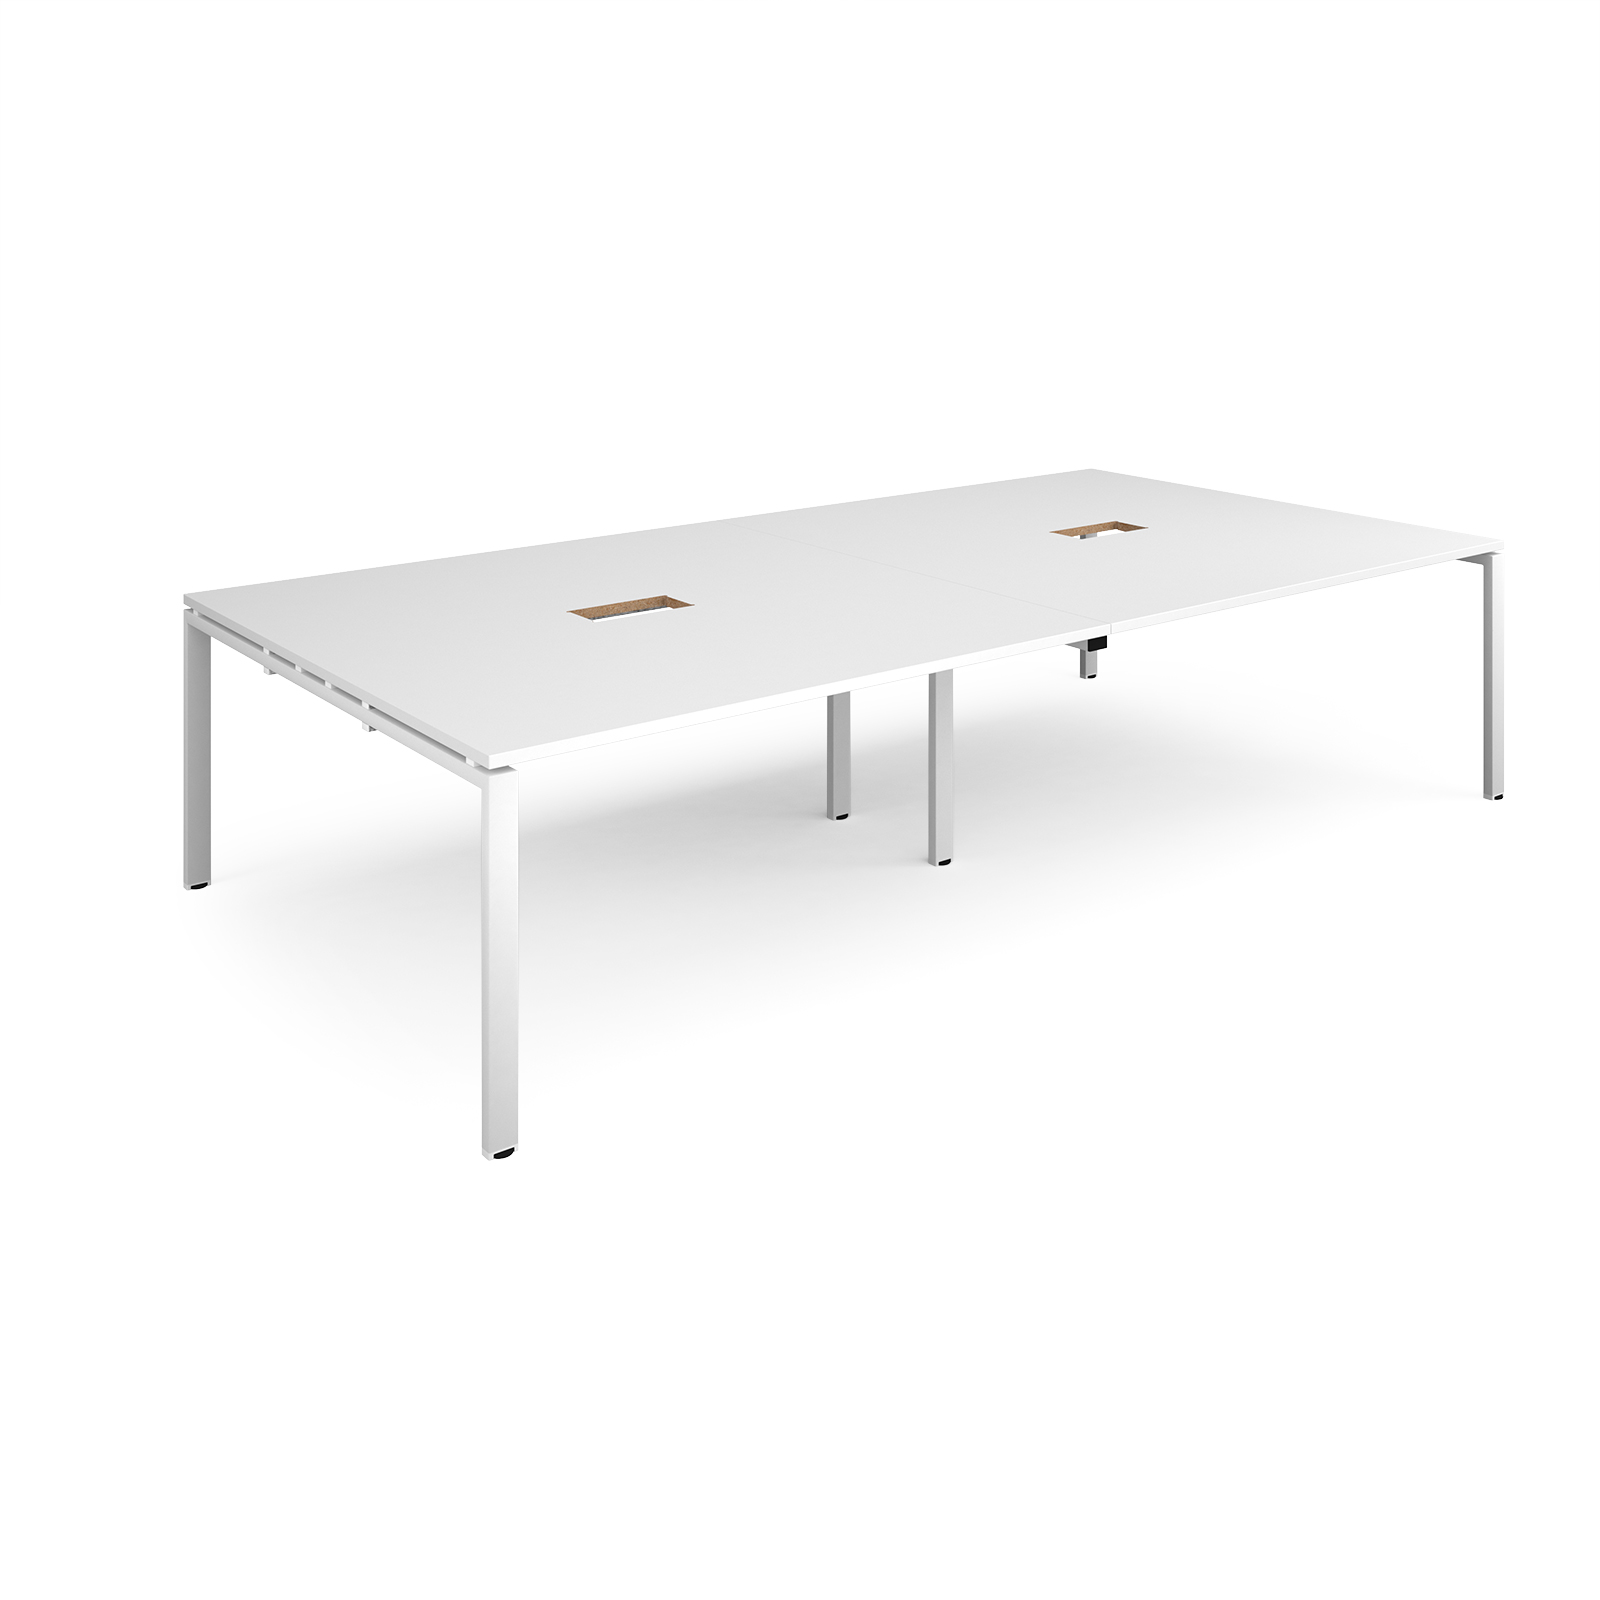 Adapt rectangular power ready boardroom table